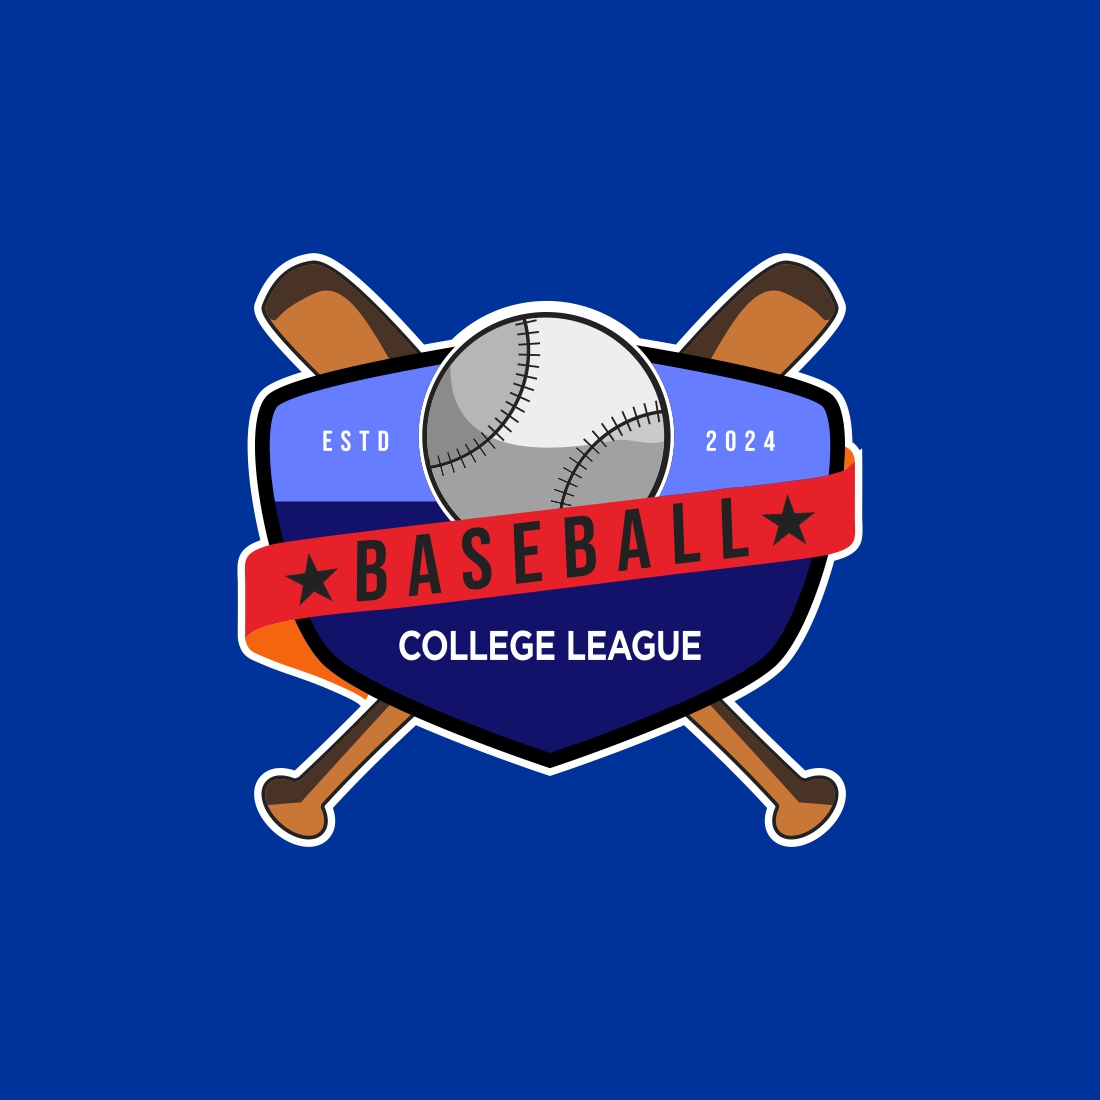 Modern professional baseball template logo design for baseball club cover image.